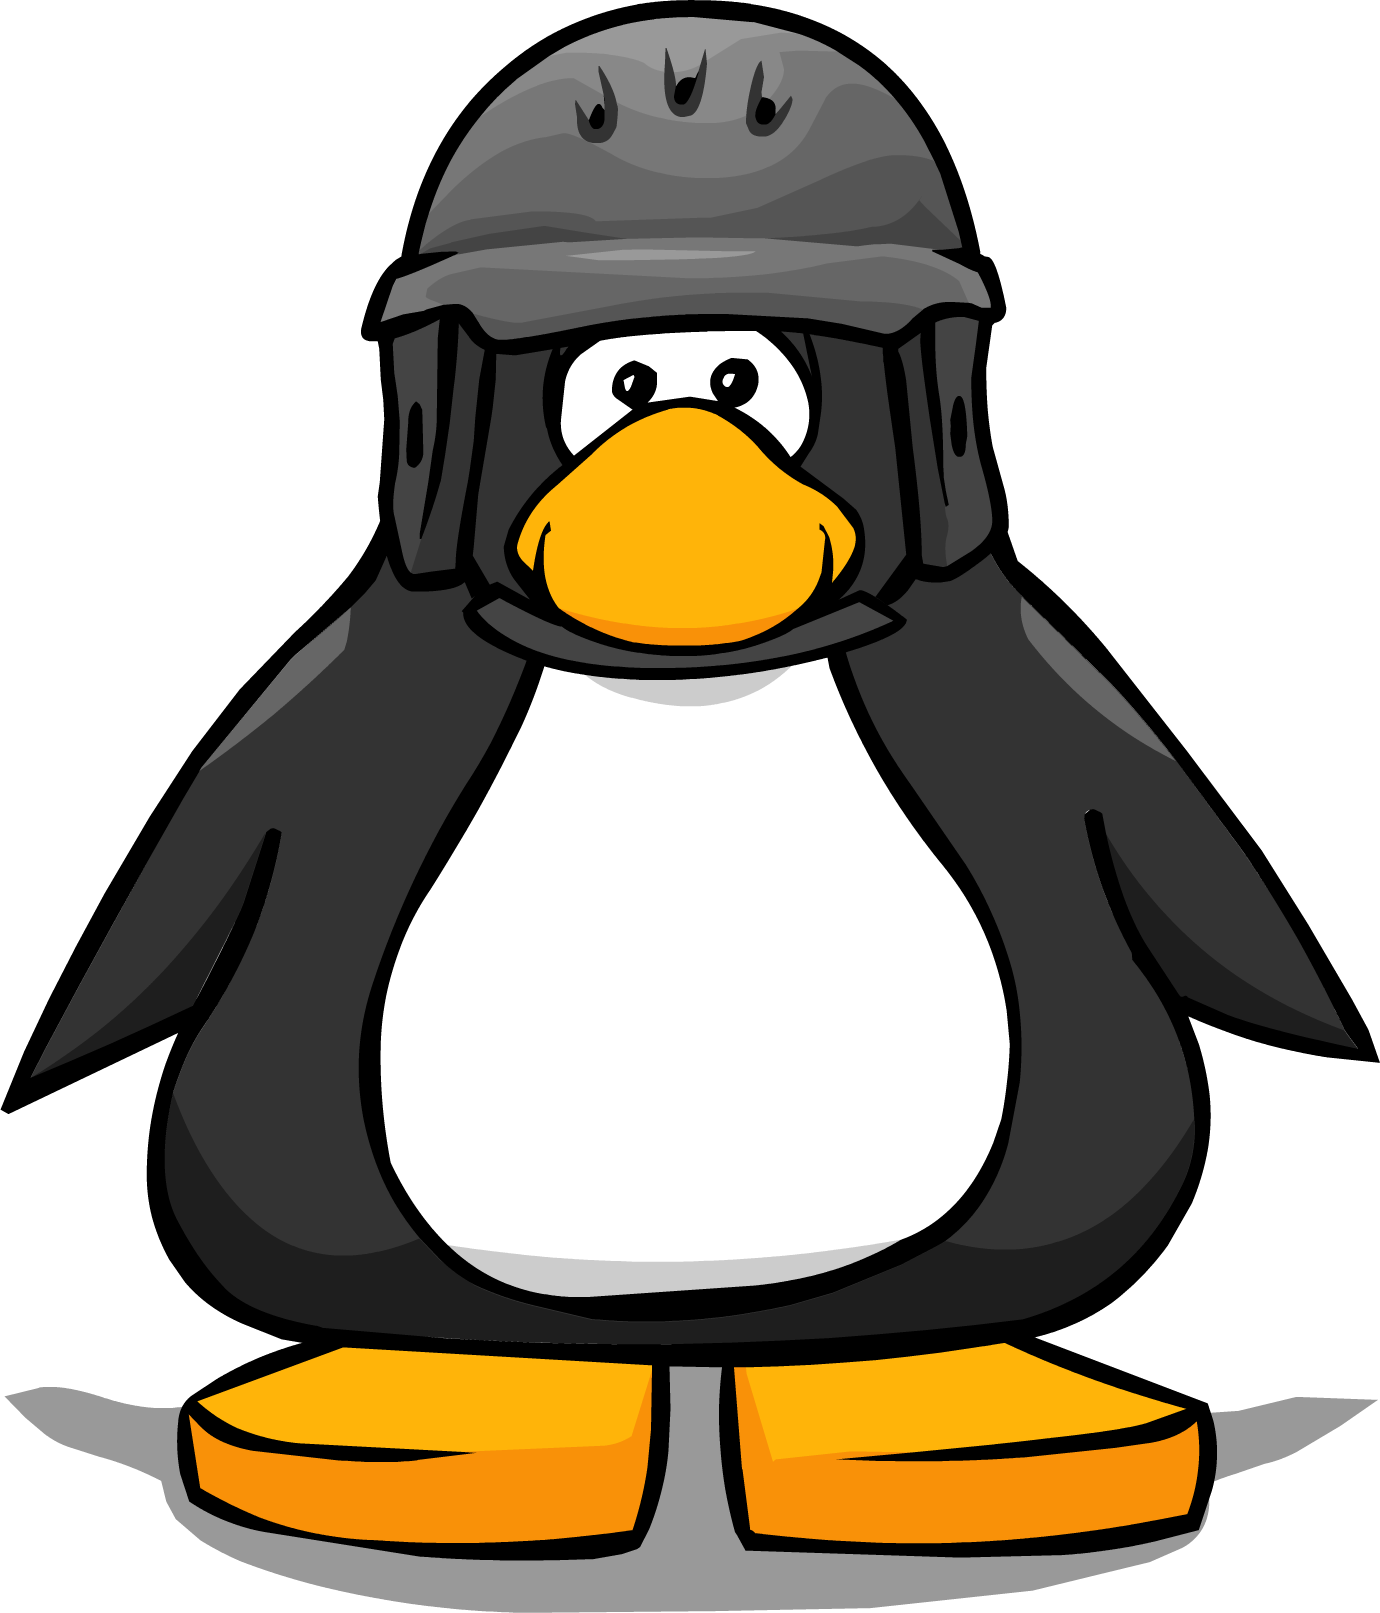 Snowboarding clipart penguin. Image snowboard helmet png